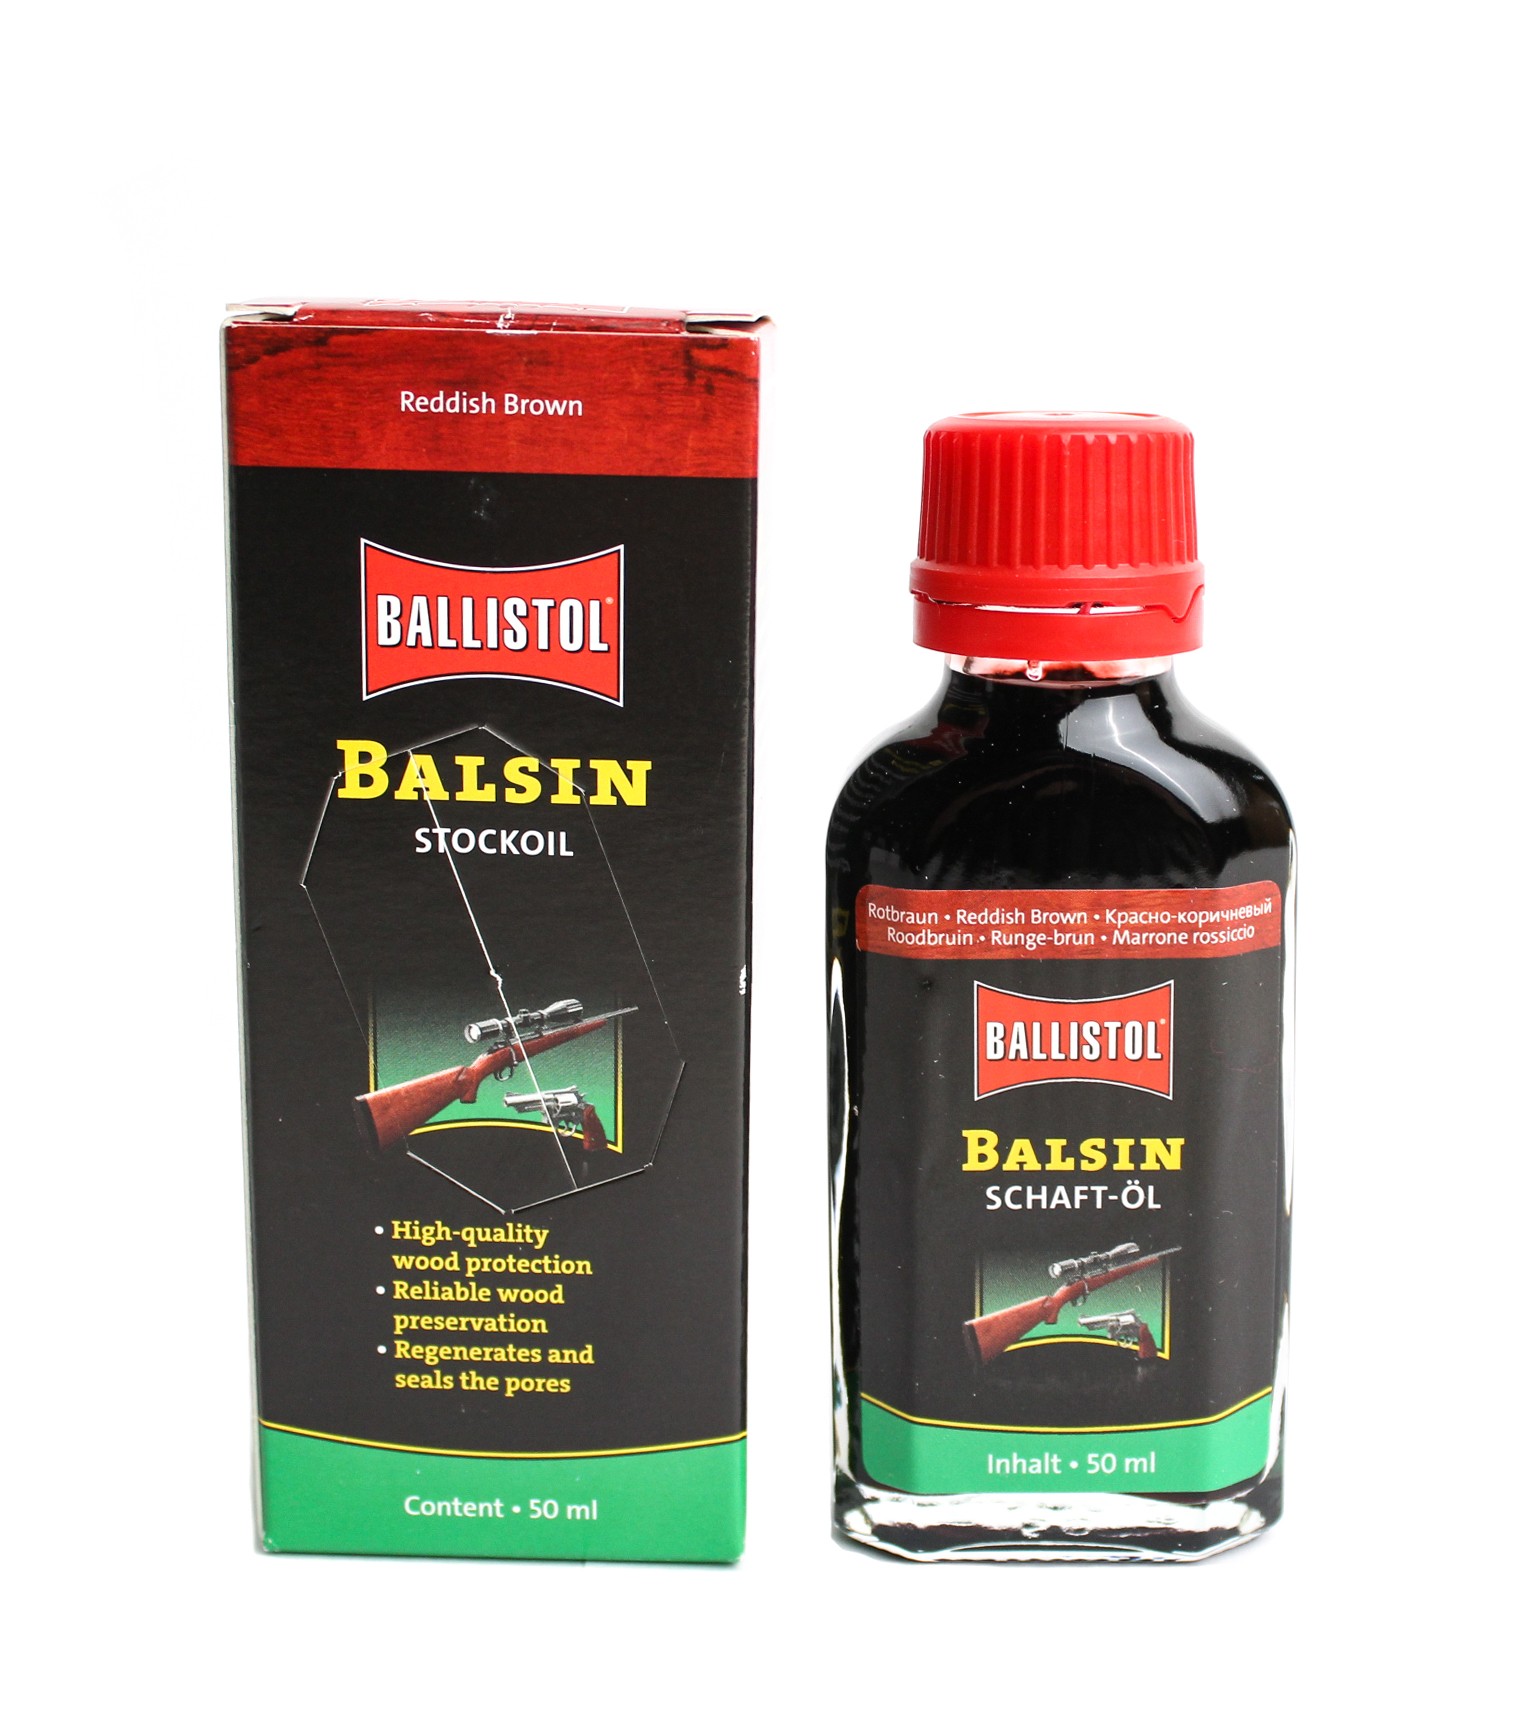 Средство Ballistol Balsin для обработки дерева Scherell Schaftol 50мл крас-бурое - фото 1